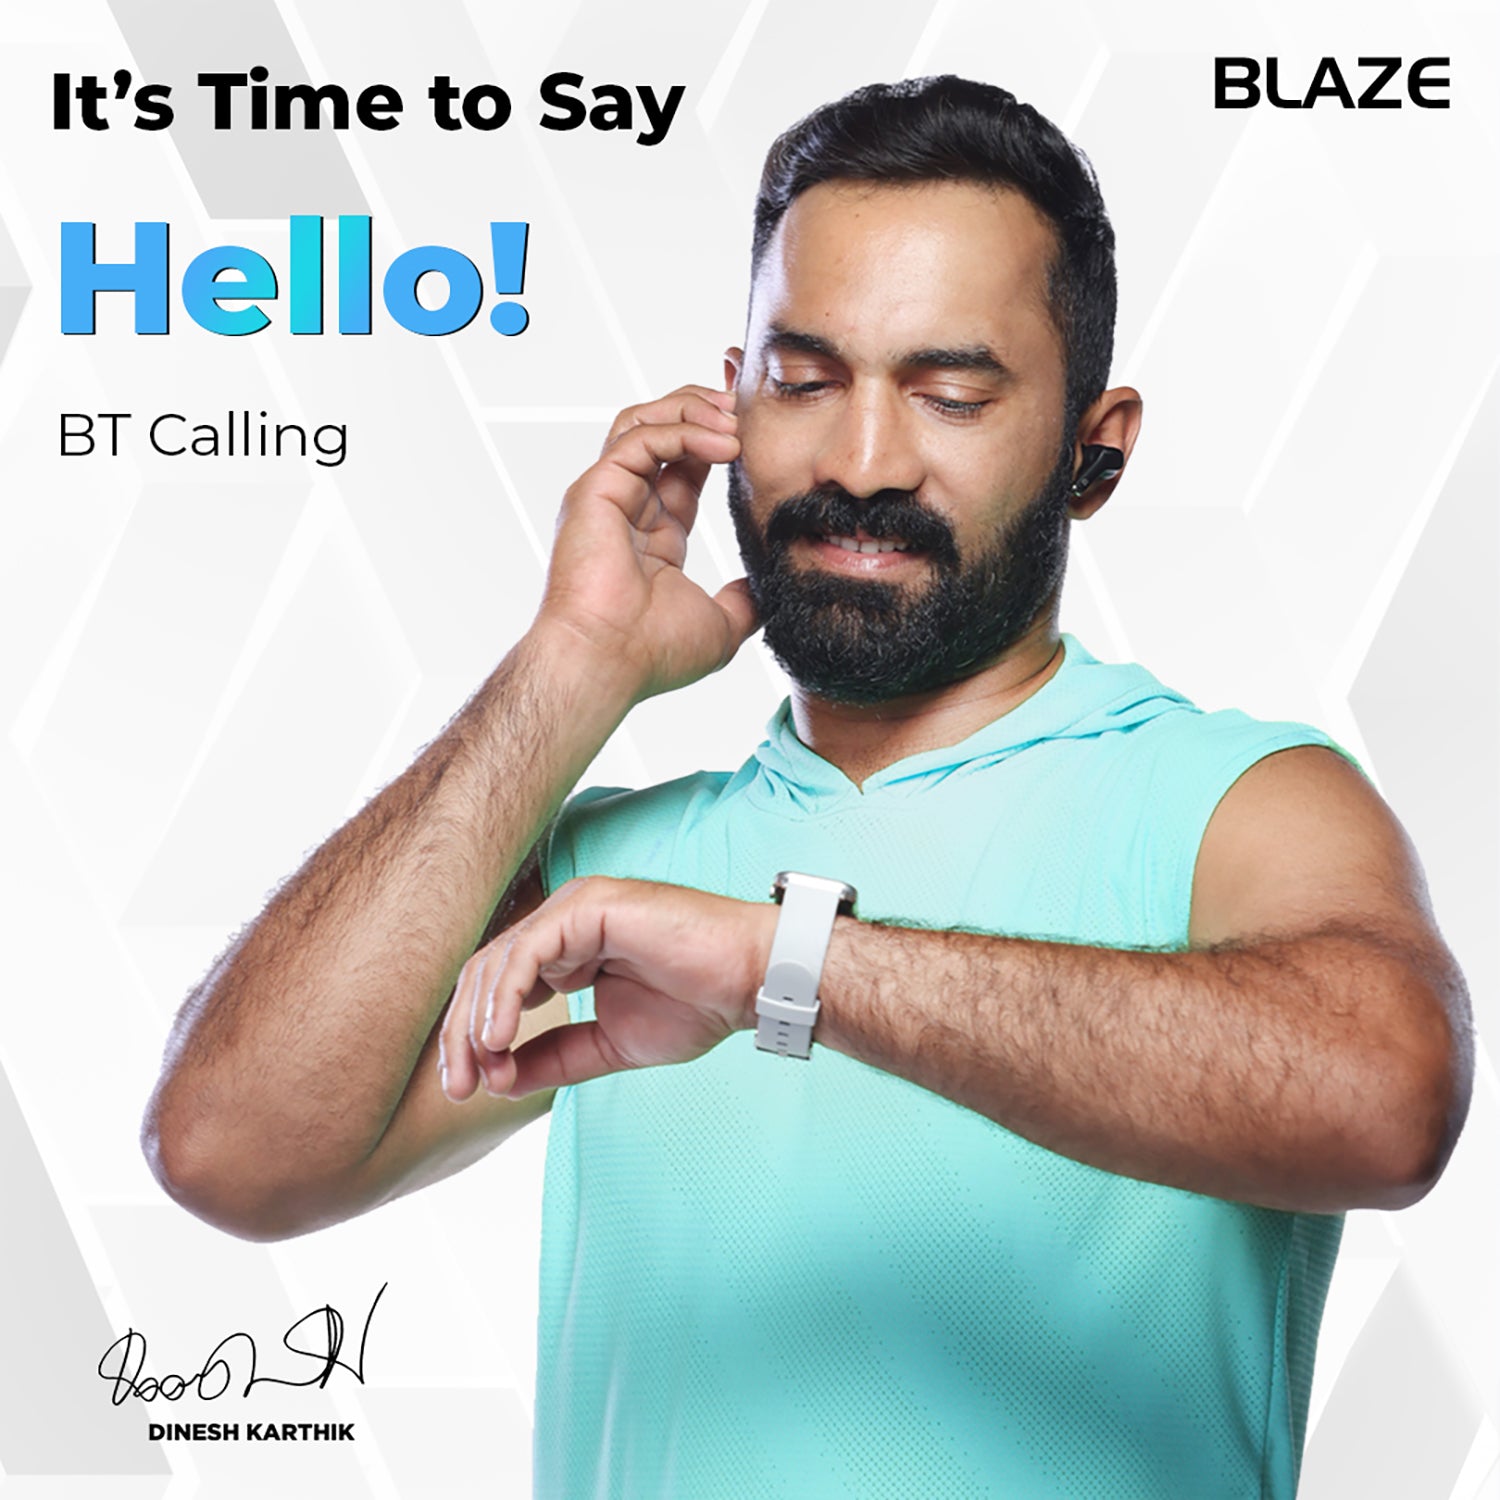 Gizmore Blaze BT Calling 4.29 Cm (1.69) IPS Curved Display With 500 Nits Brightness Smartwatch